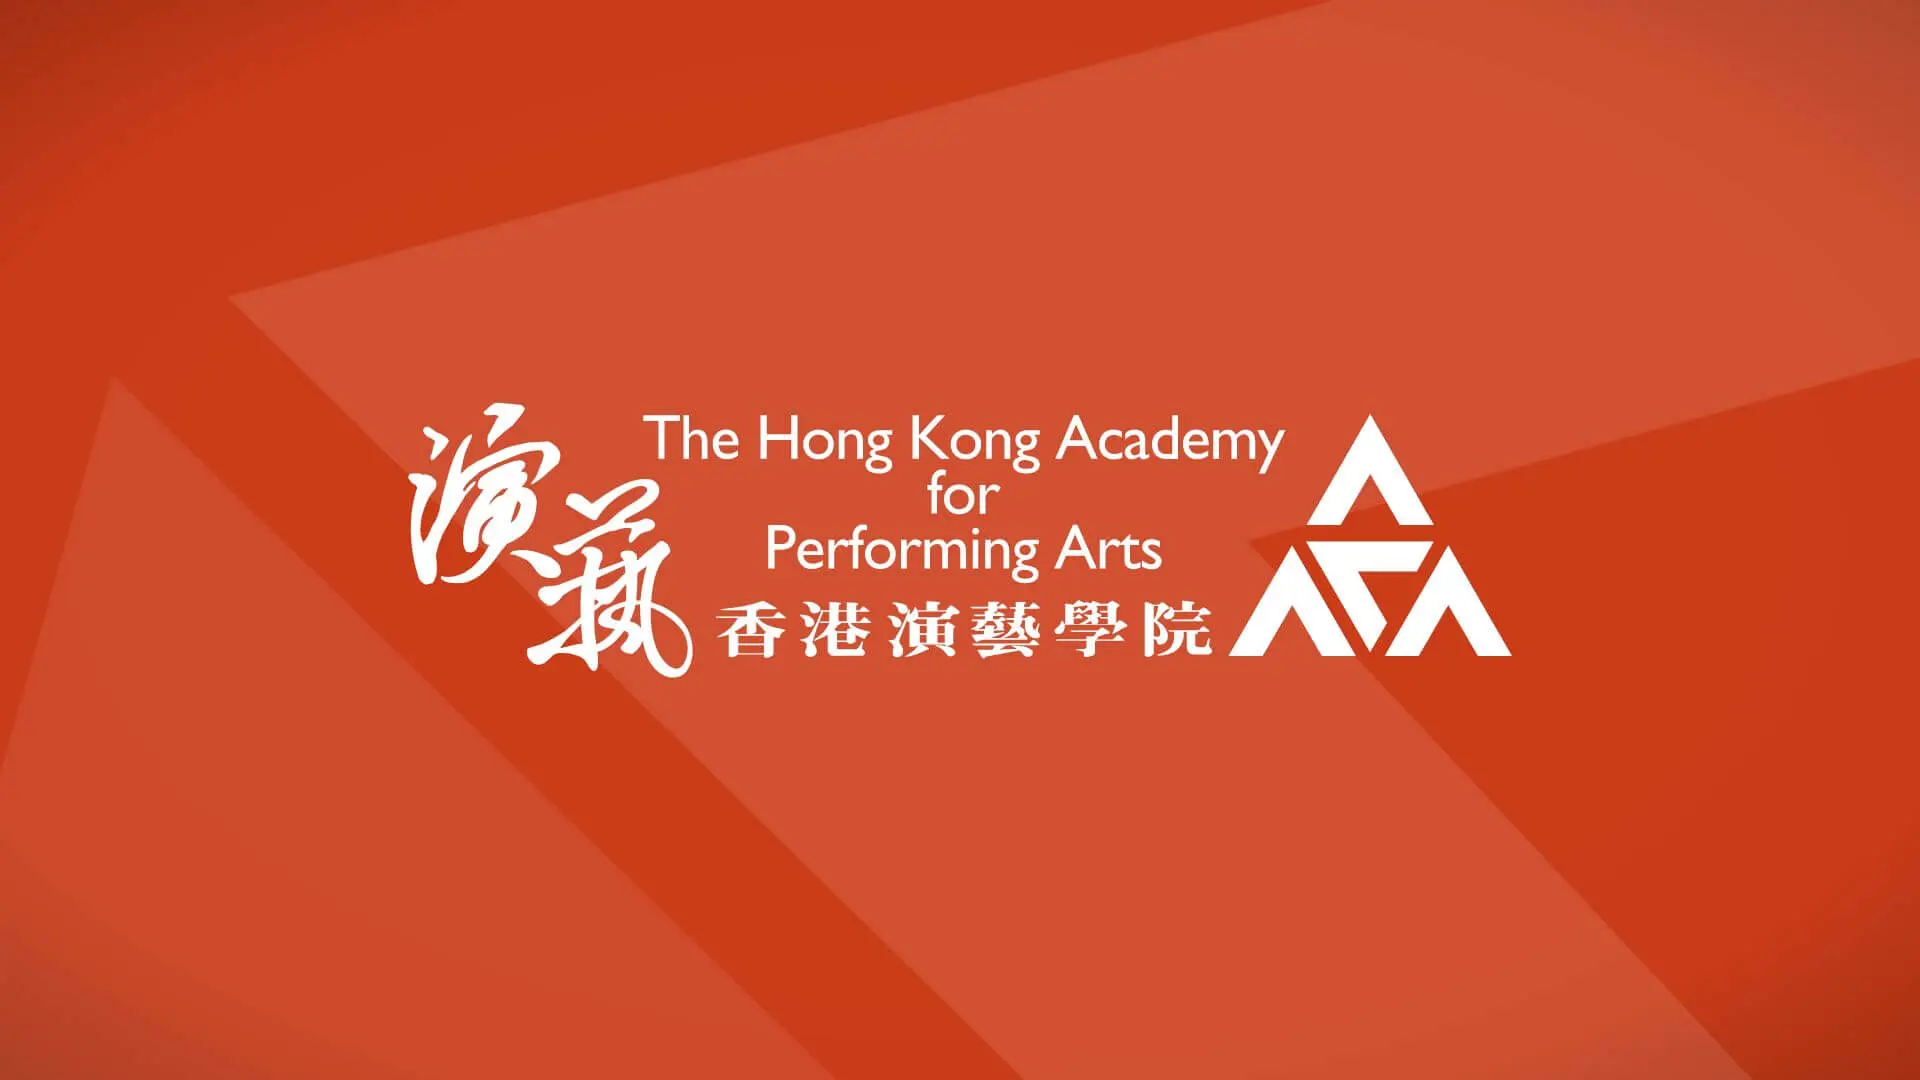 Academy Master of Music Graduation Recital - Violin: Yang Qian